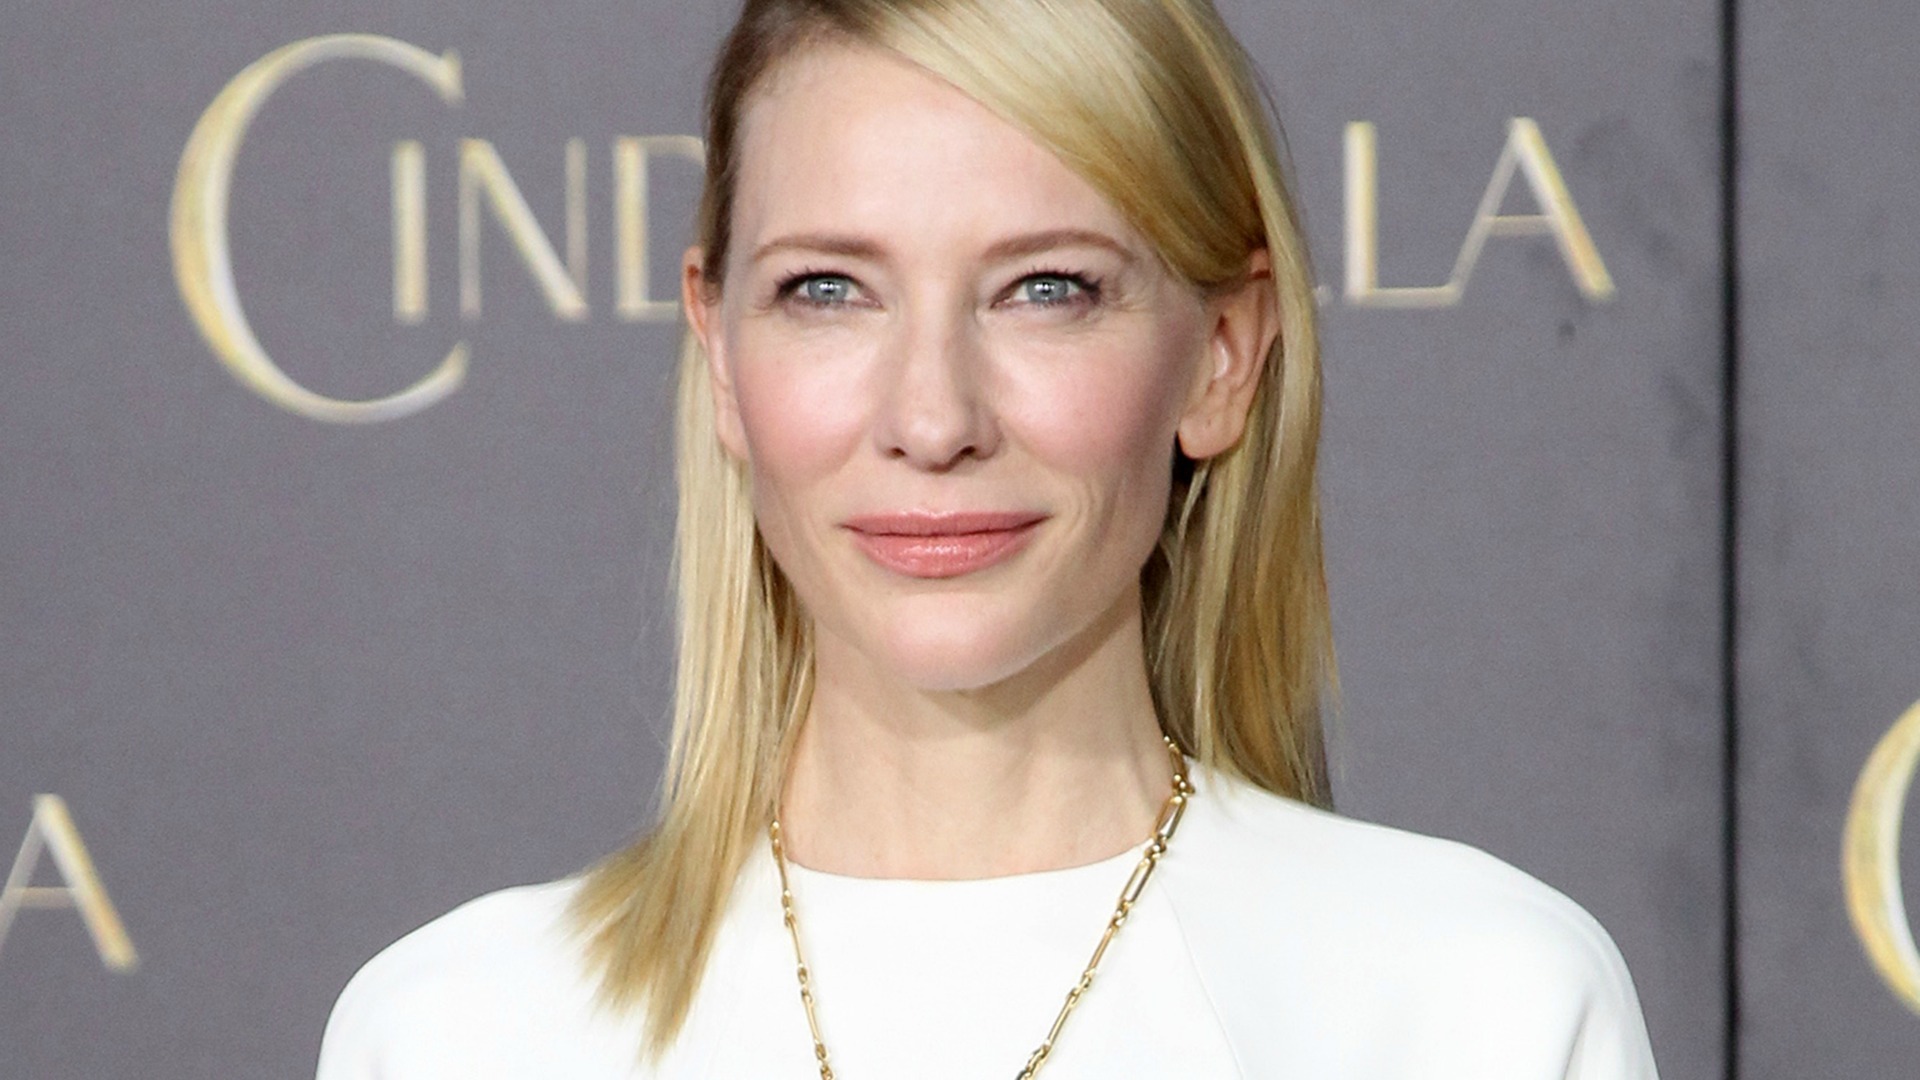 Festival de Cannes : Cate Blanchett sera la prochaine présidente du jury